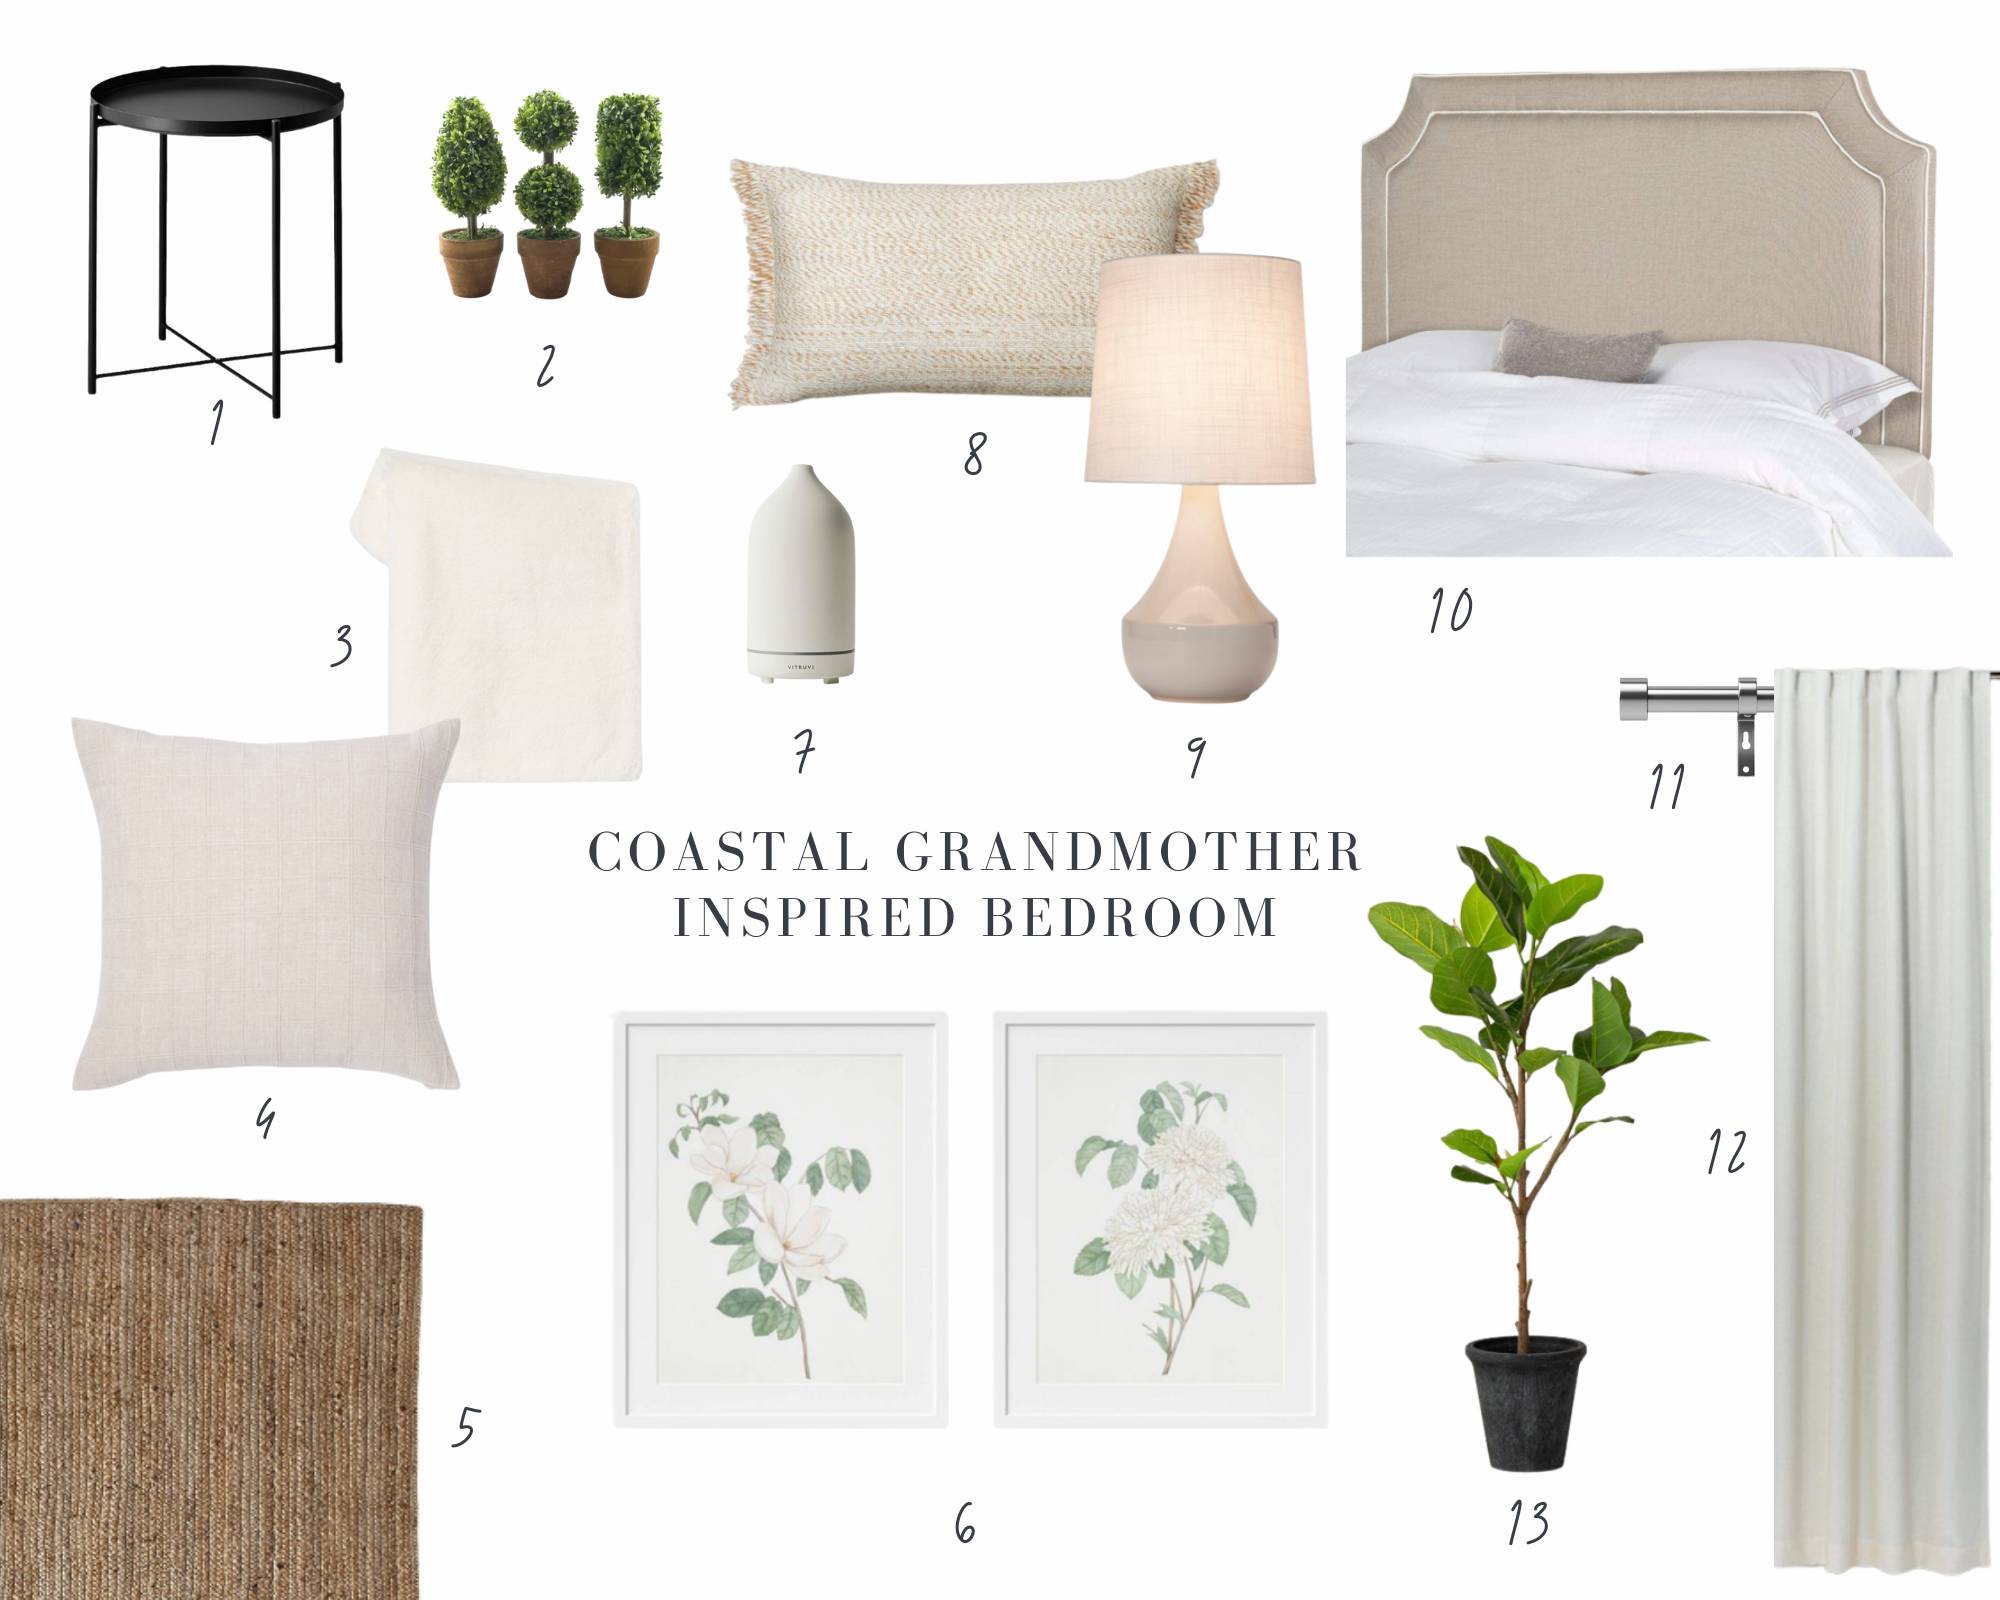 Coastal Grandmother Inspired Bedroom